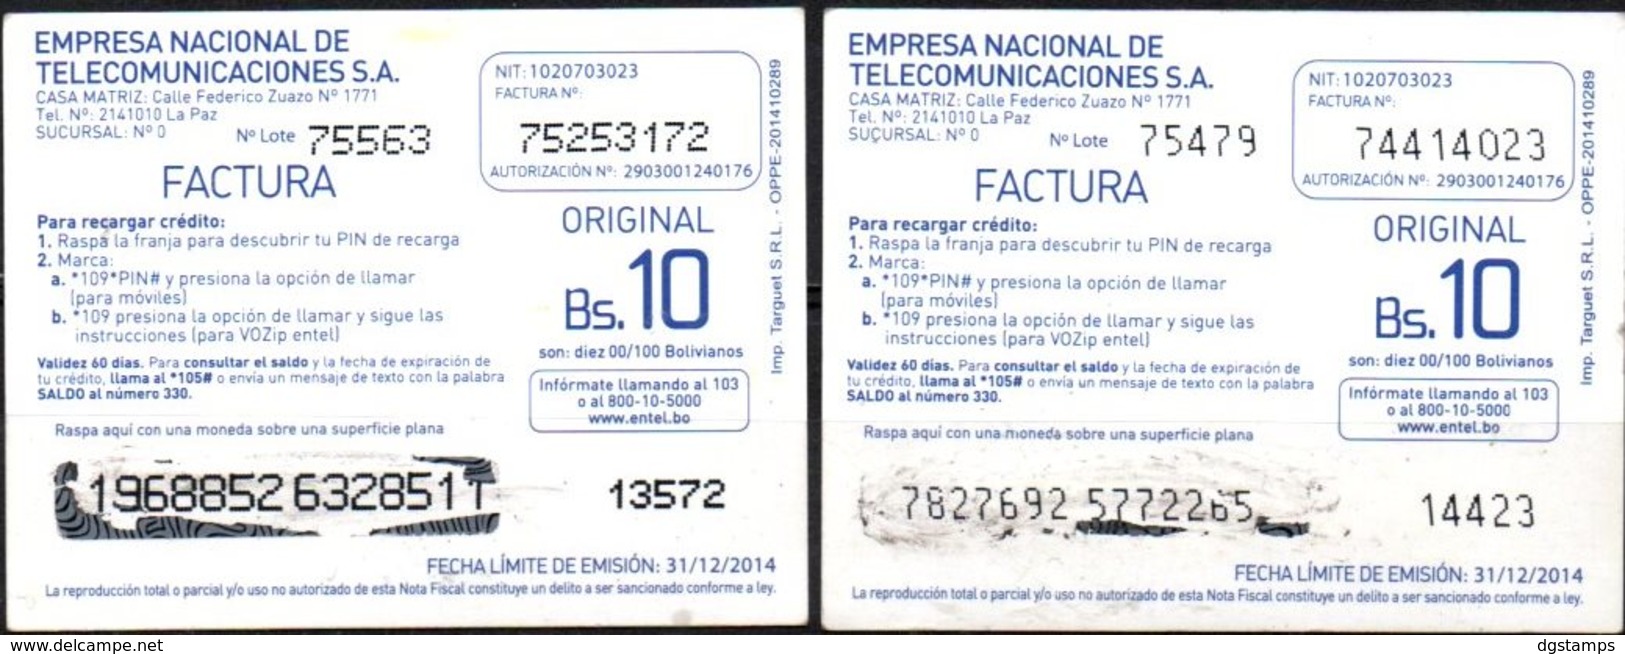 Bolivia 2013 - 31-12-2014 Prepago ENTEL. YPFB Engarrafadora De Gas Senkata - El Alto . 2 Tiradas, 2 TIPOS De Numeracion. - Petrole